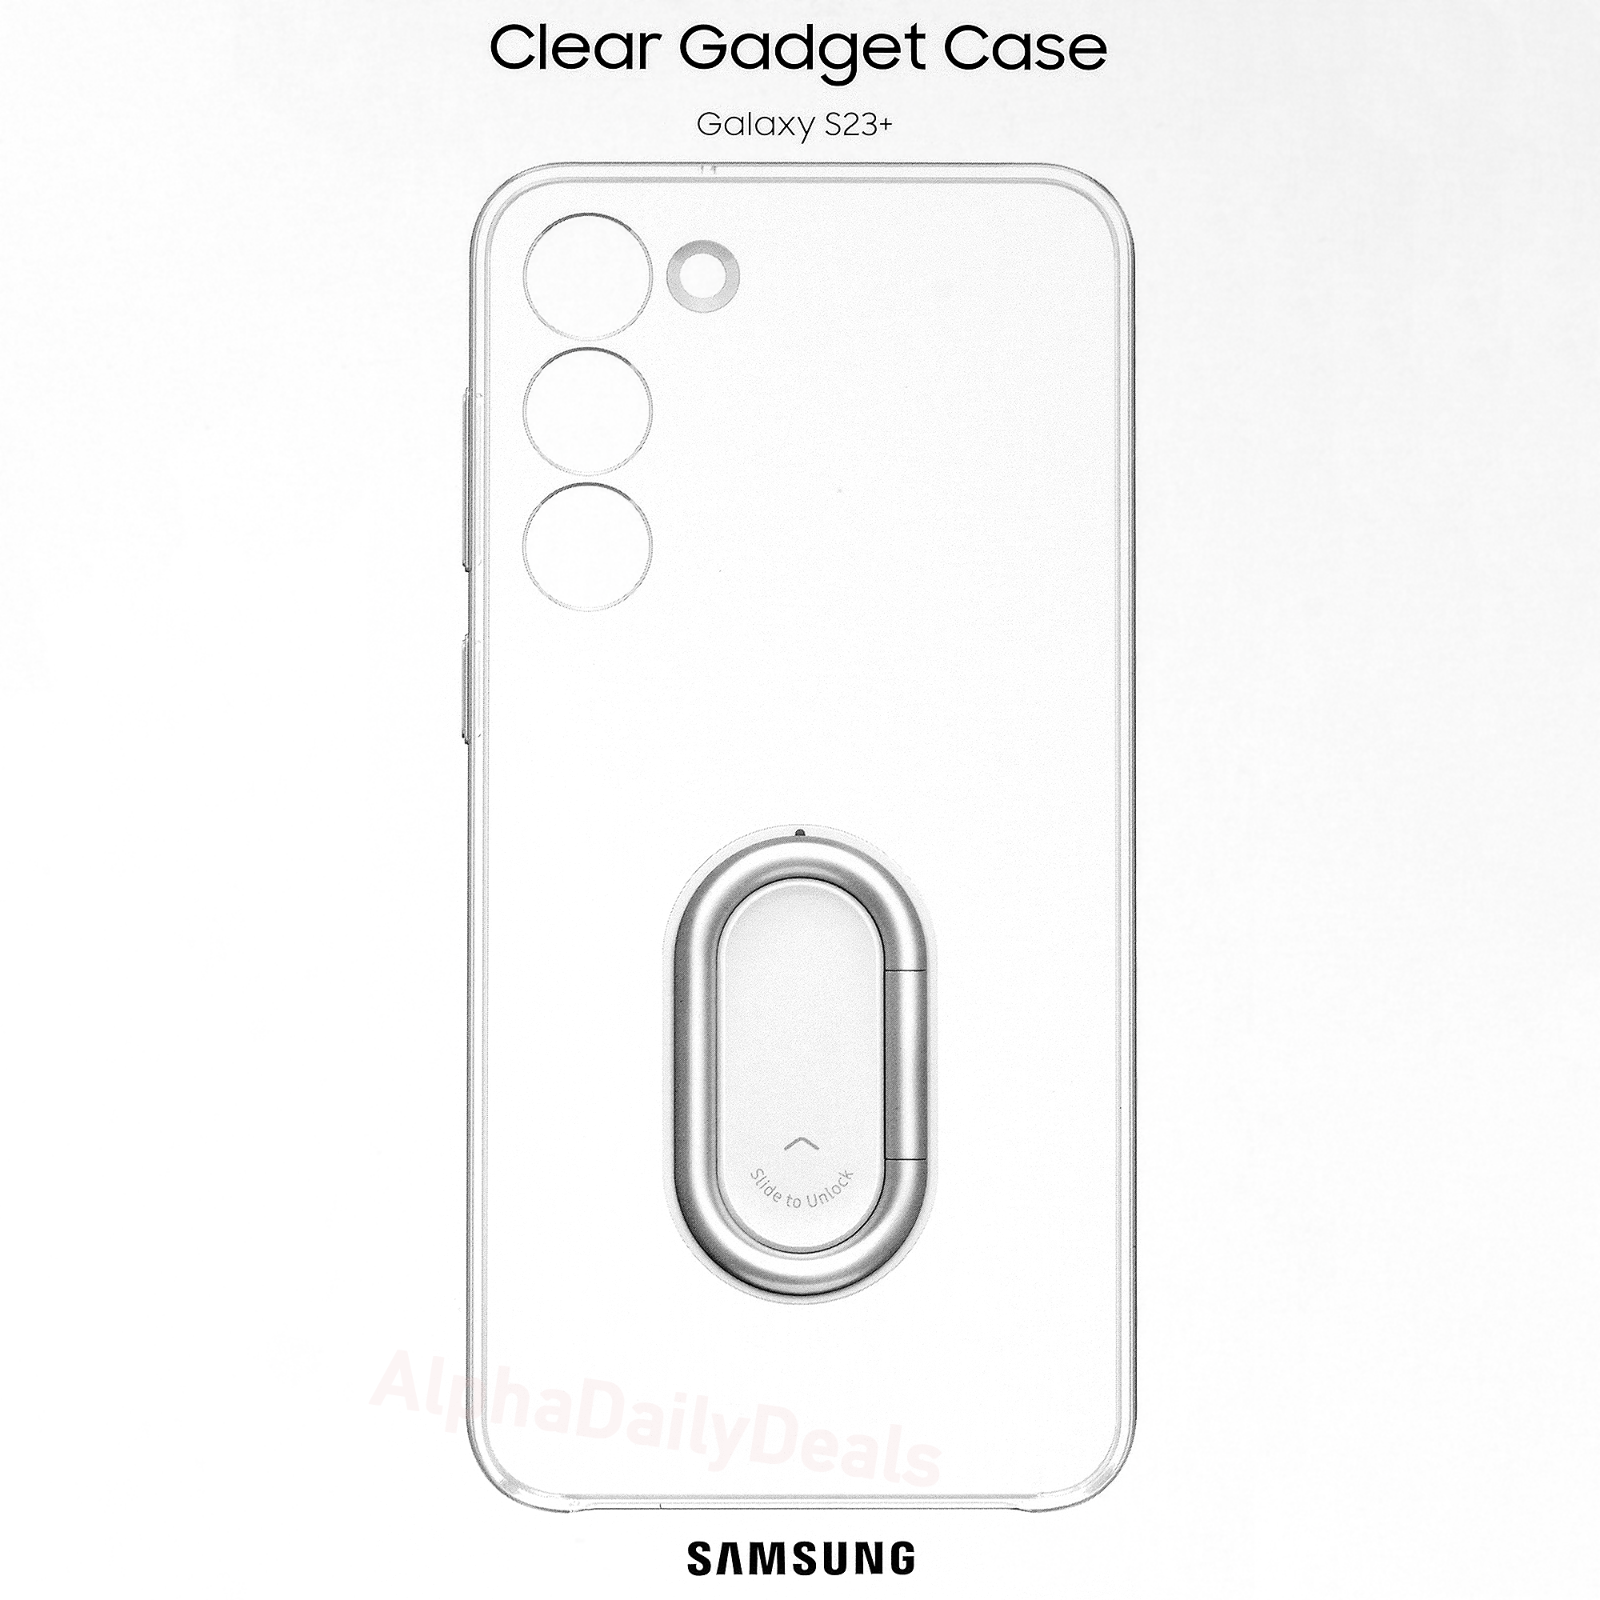 Genuine OEM Samsung Galaxy S23+ Clear Gadget Case with Kickstand